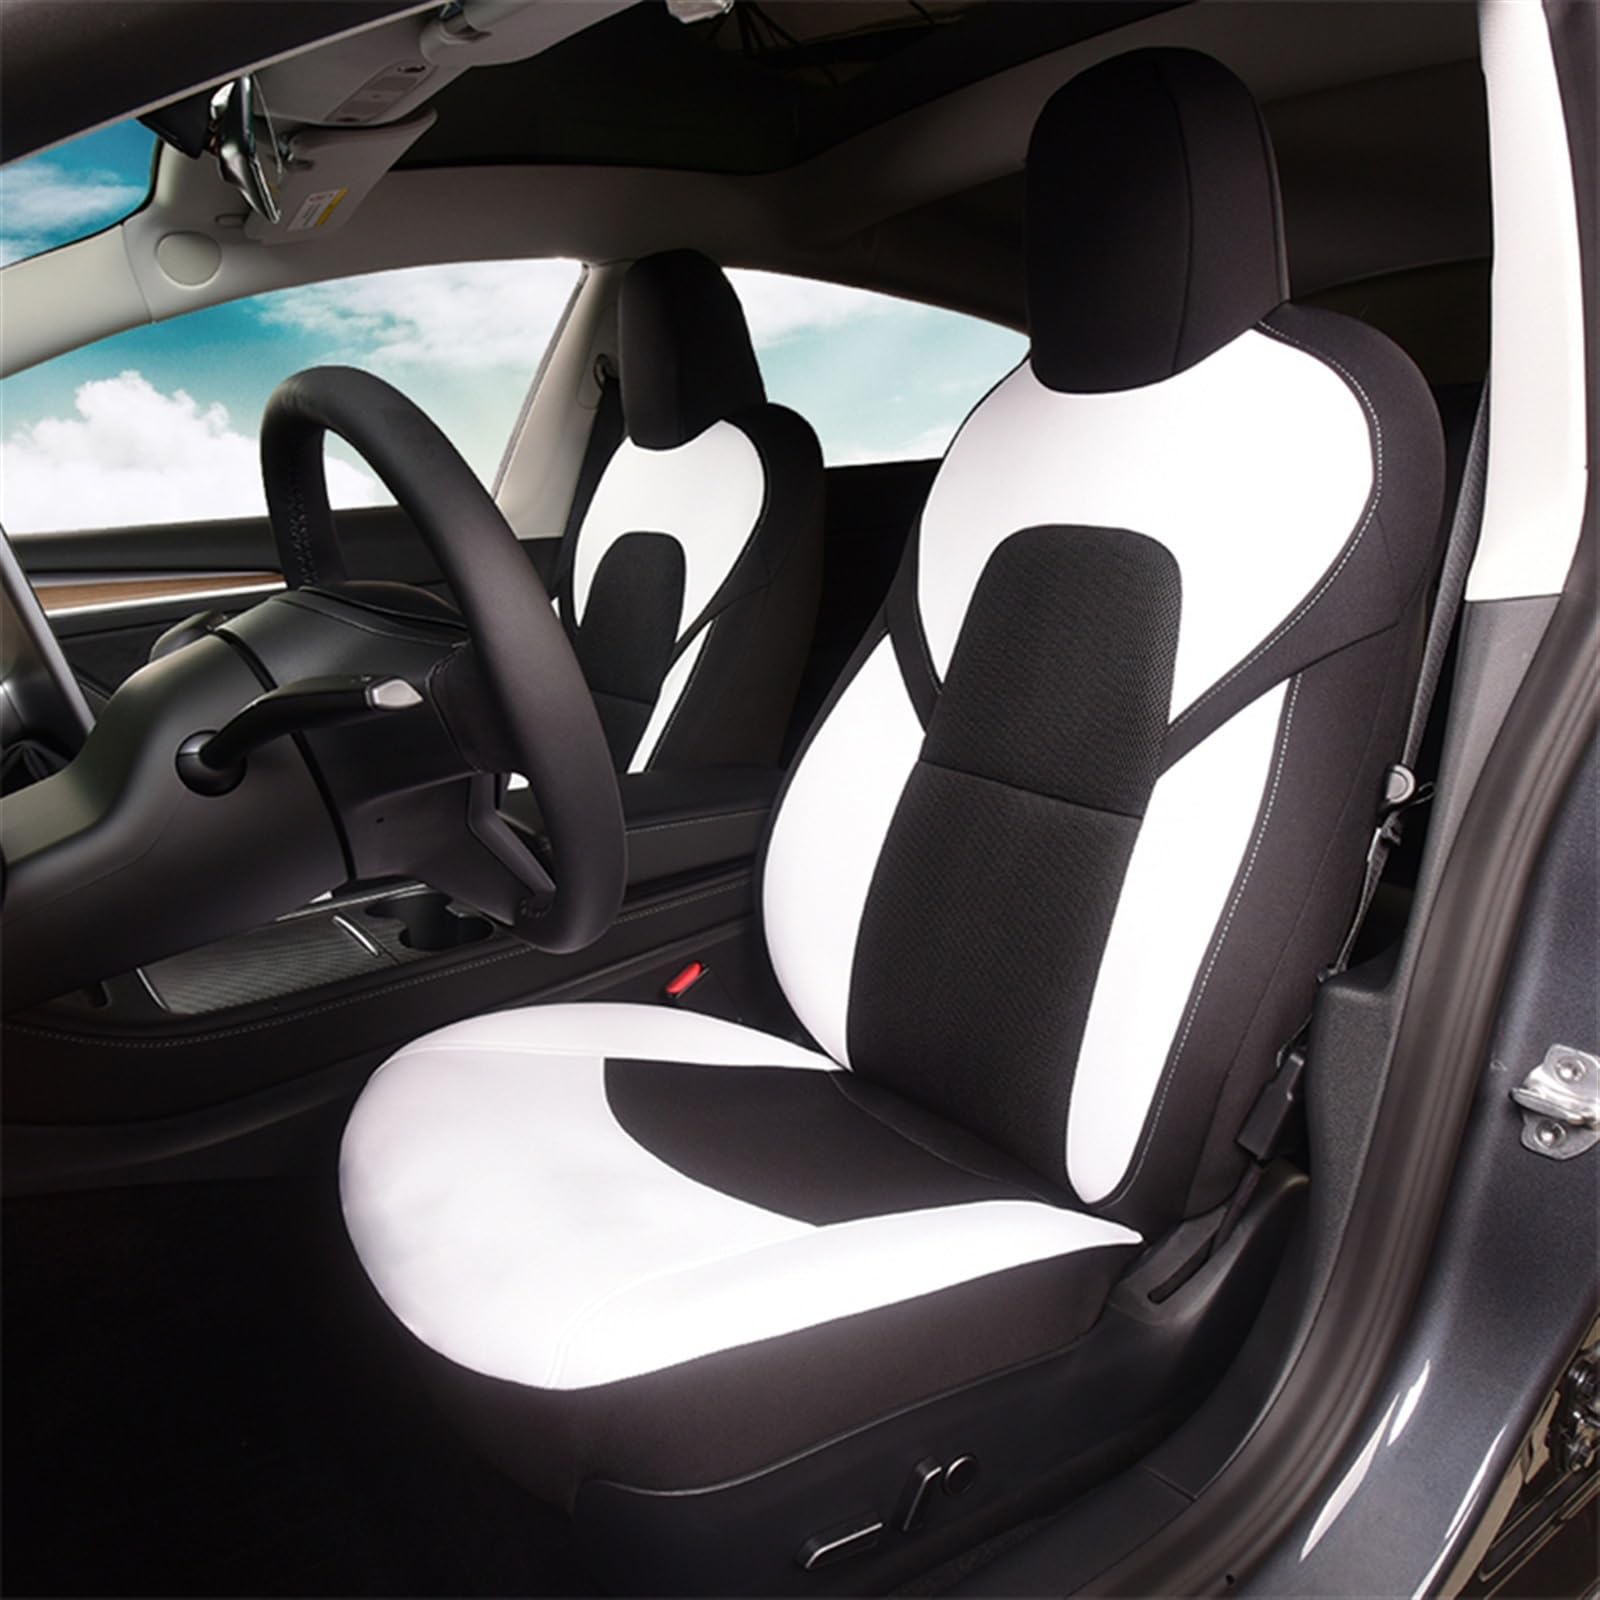 TATARENGS Automobilinnenraum Kompatibel Mit Tesla Für Model 3/ Y Auto-Vordersitzbezüge, Fahrersitzbezug, Sitzschutz, Vier-Jahreszeiten-Sitzbezug(color1) von TATARENGS